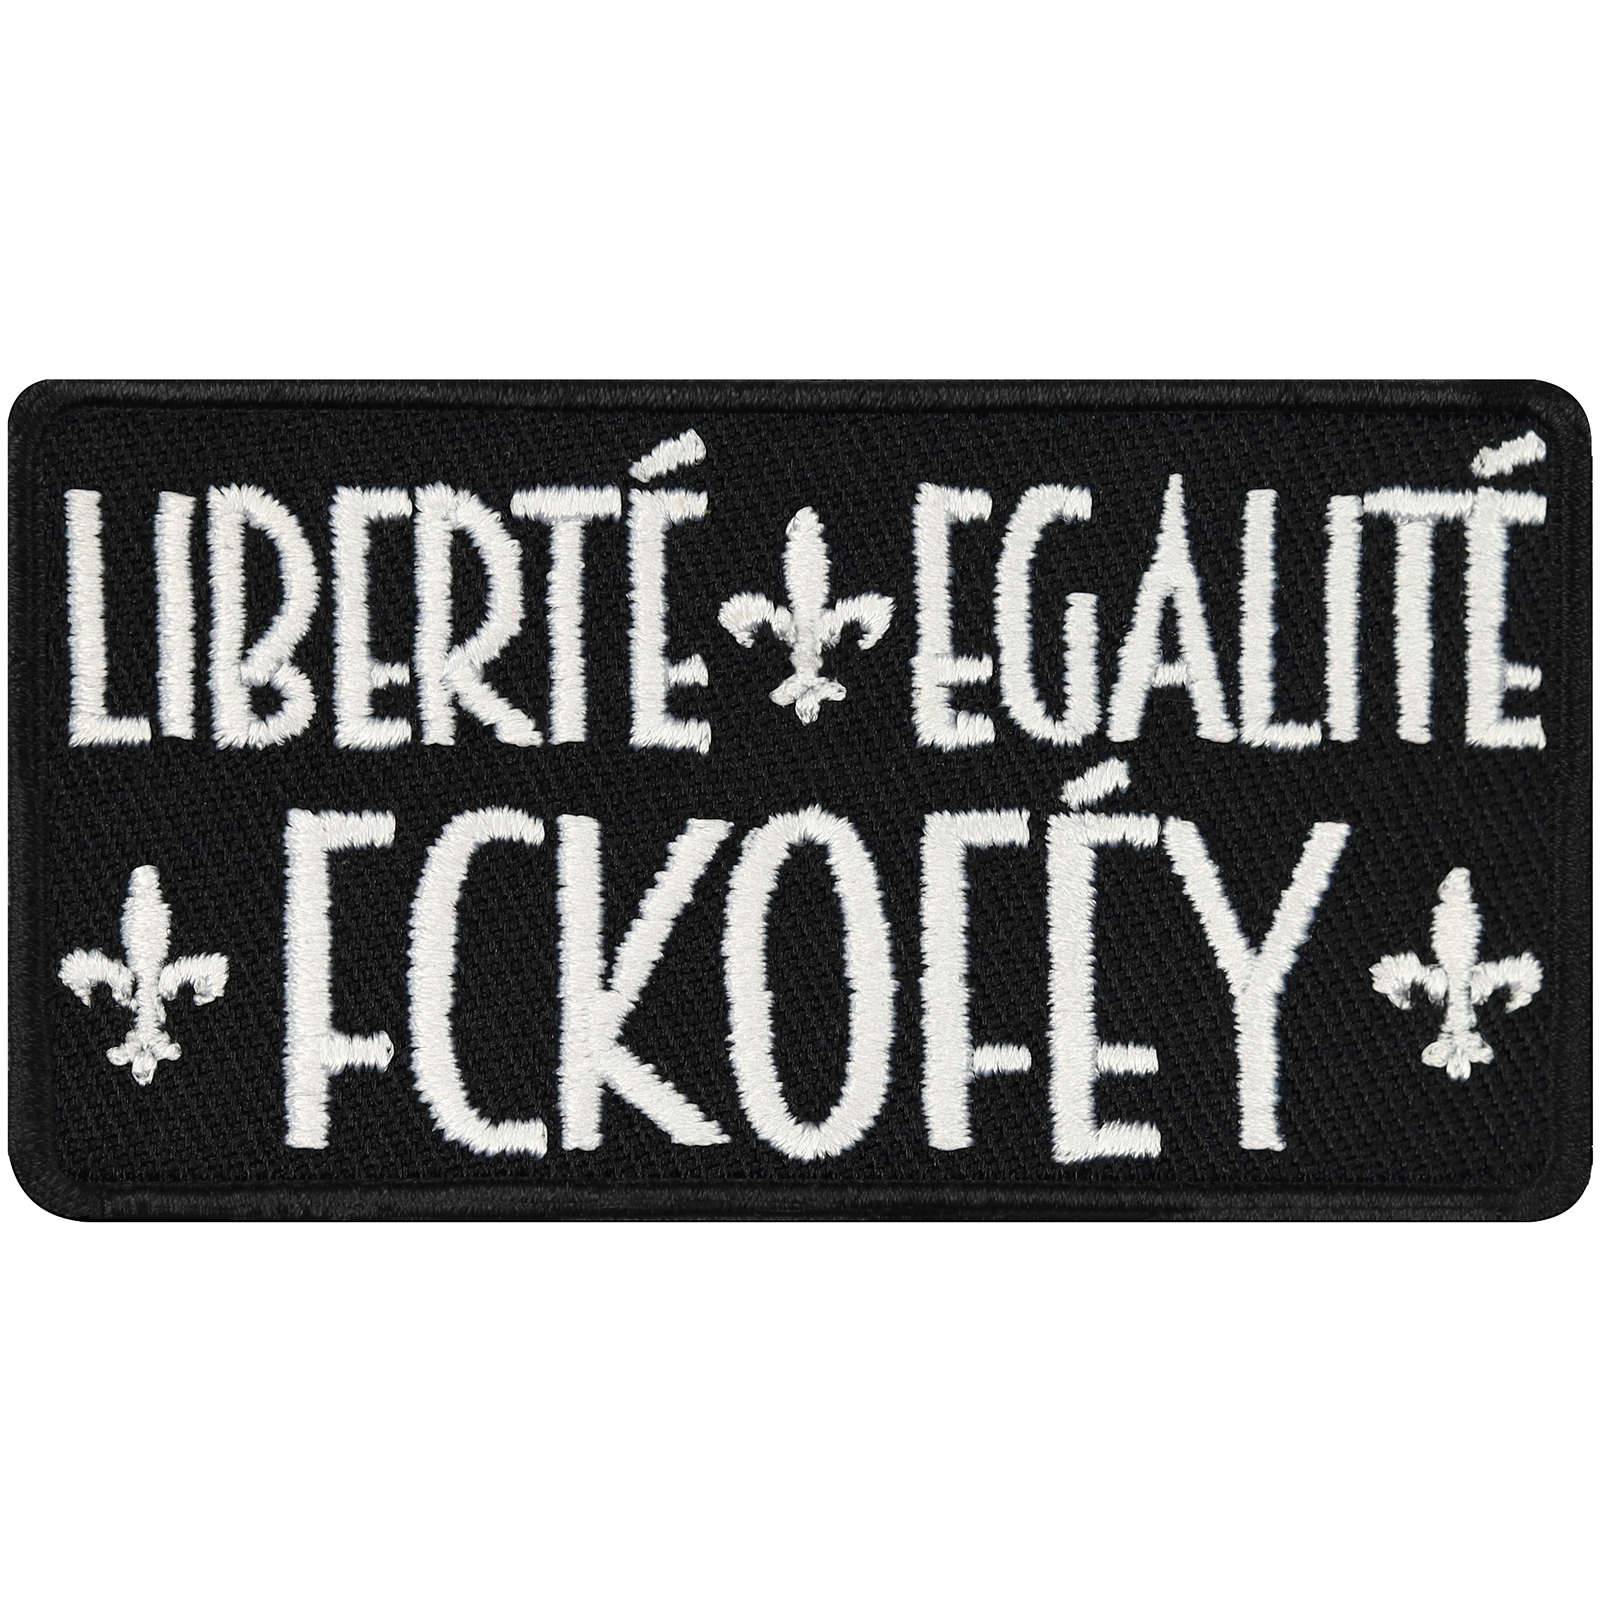 Lustiger Patch "Liberté, Egalité, Fckofé" Aufnäher Sticker Applikation 75x40mm